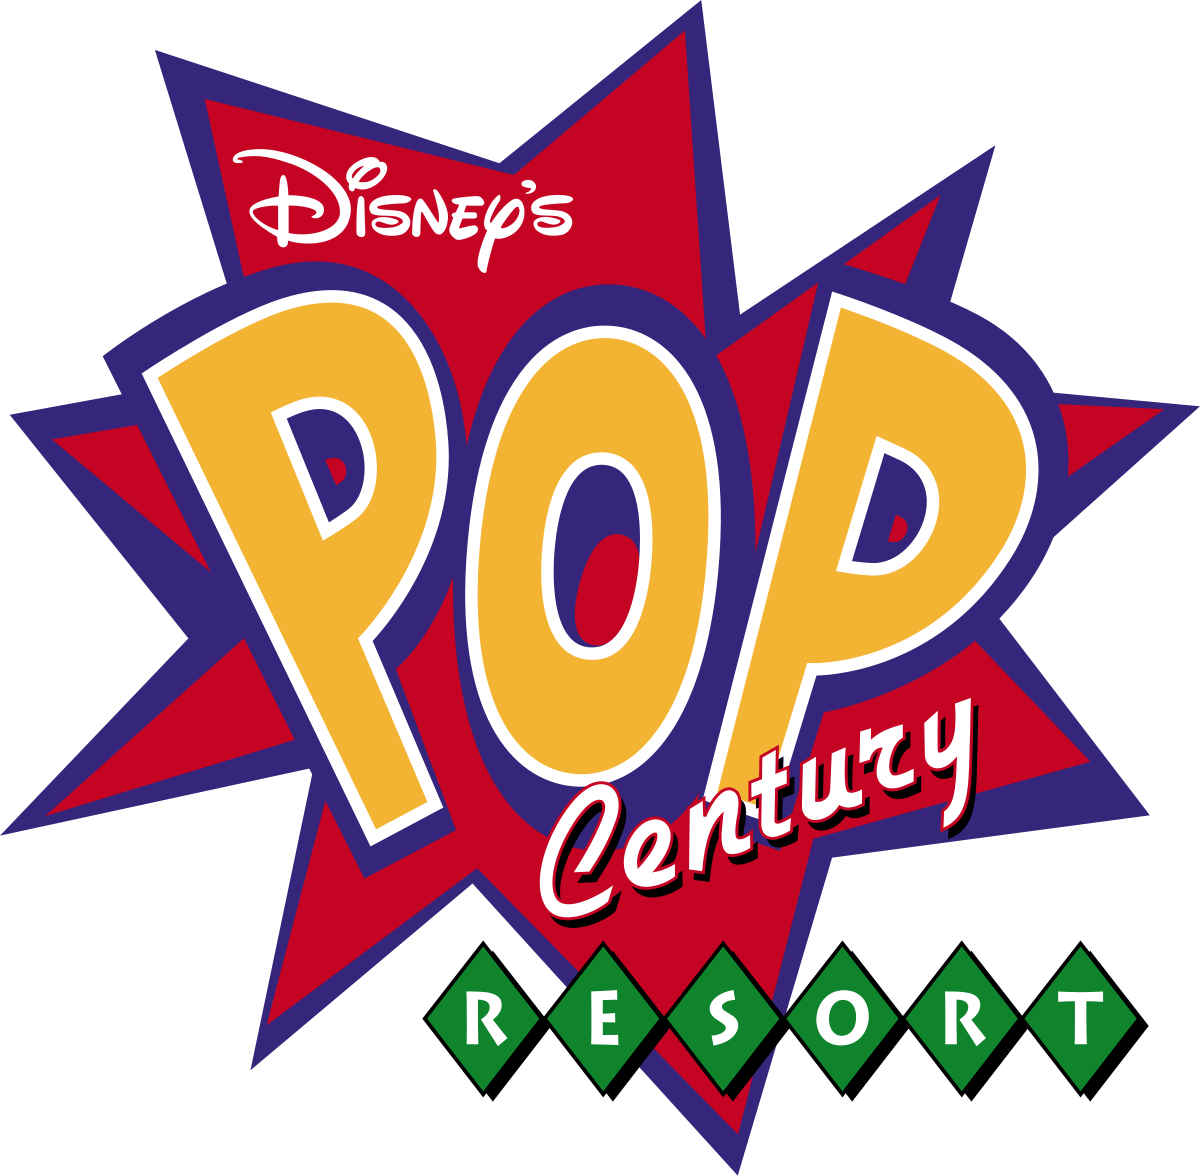 Disney World Park Logo - Disney's Pop Century Resort